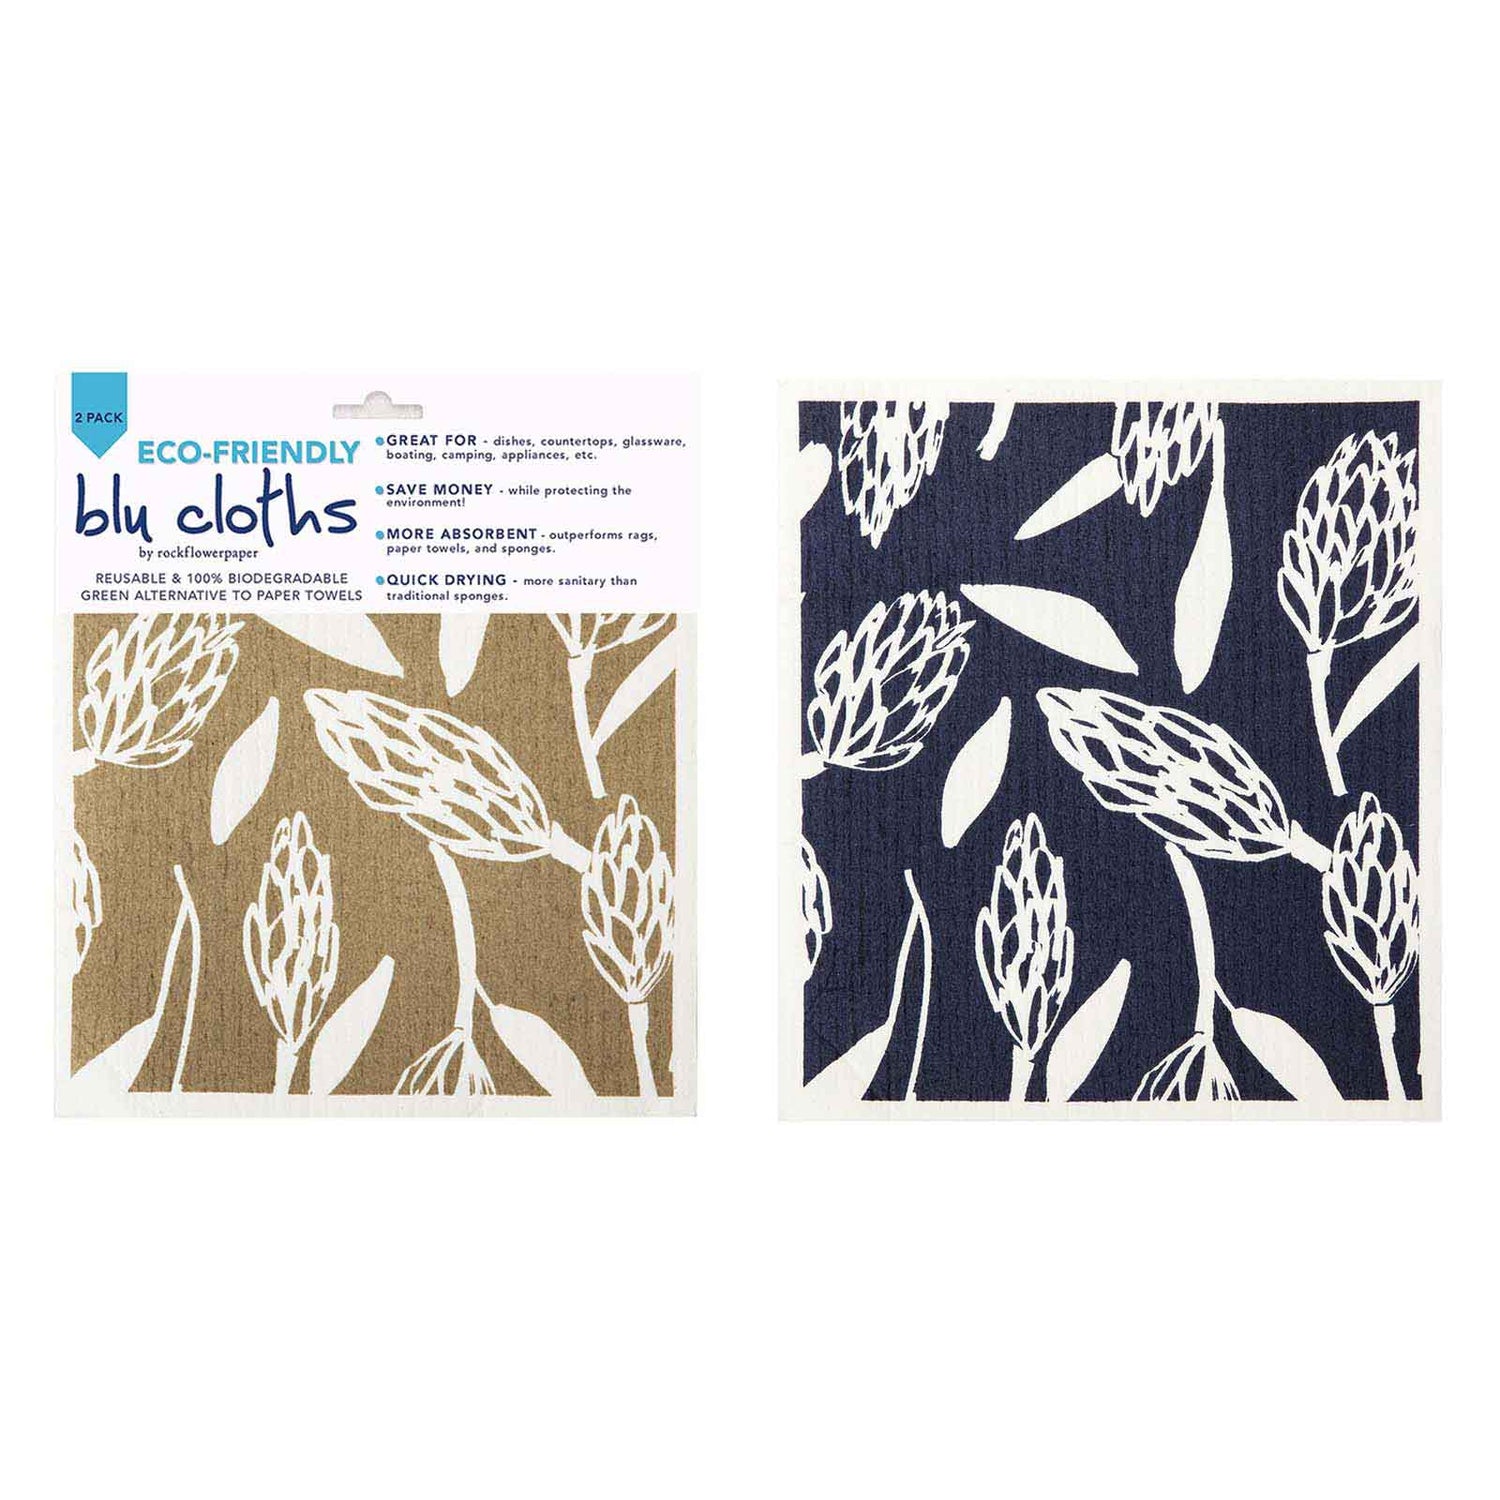 Artichokes Eco-Friendly blu Sponge Cloth  - Set of 2 Eco Cloth - rockflowerpaper